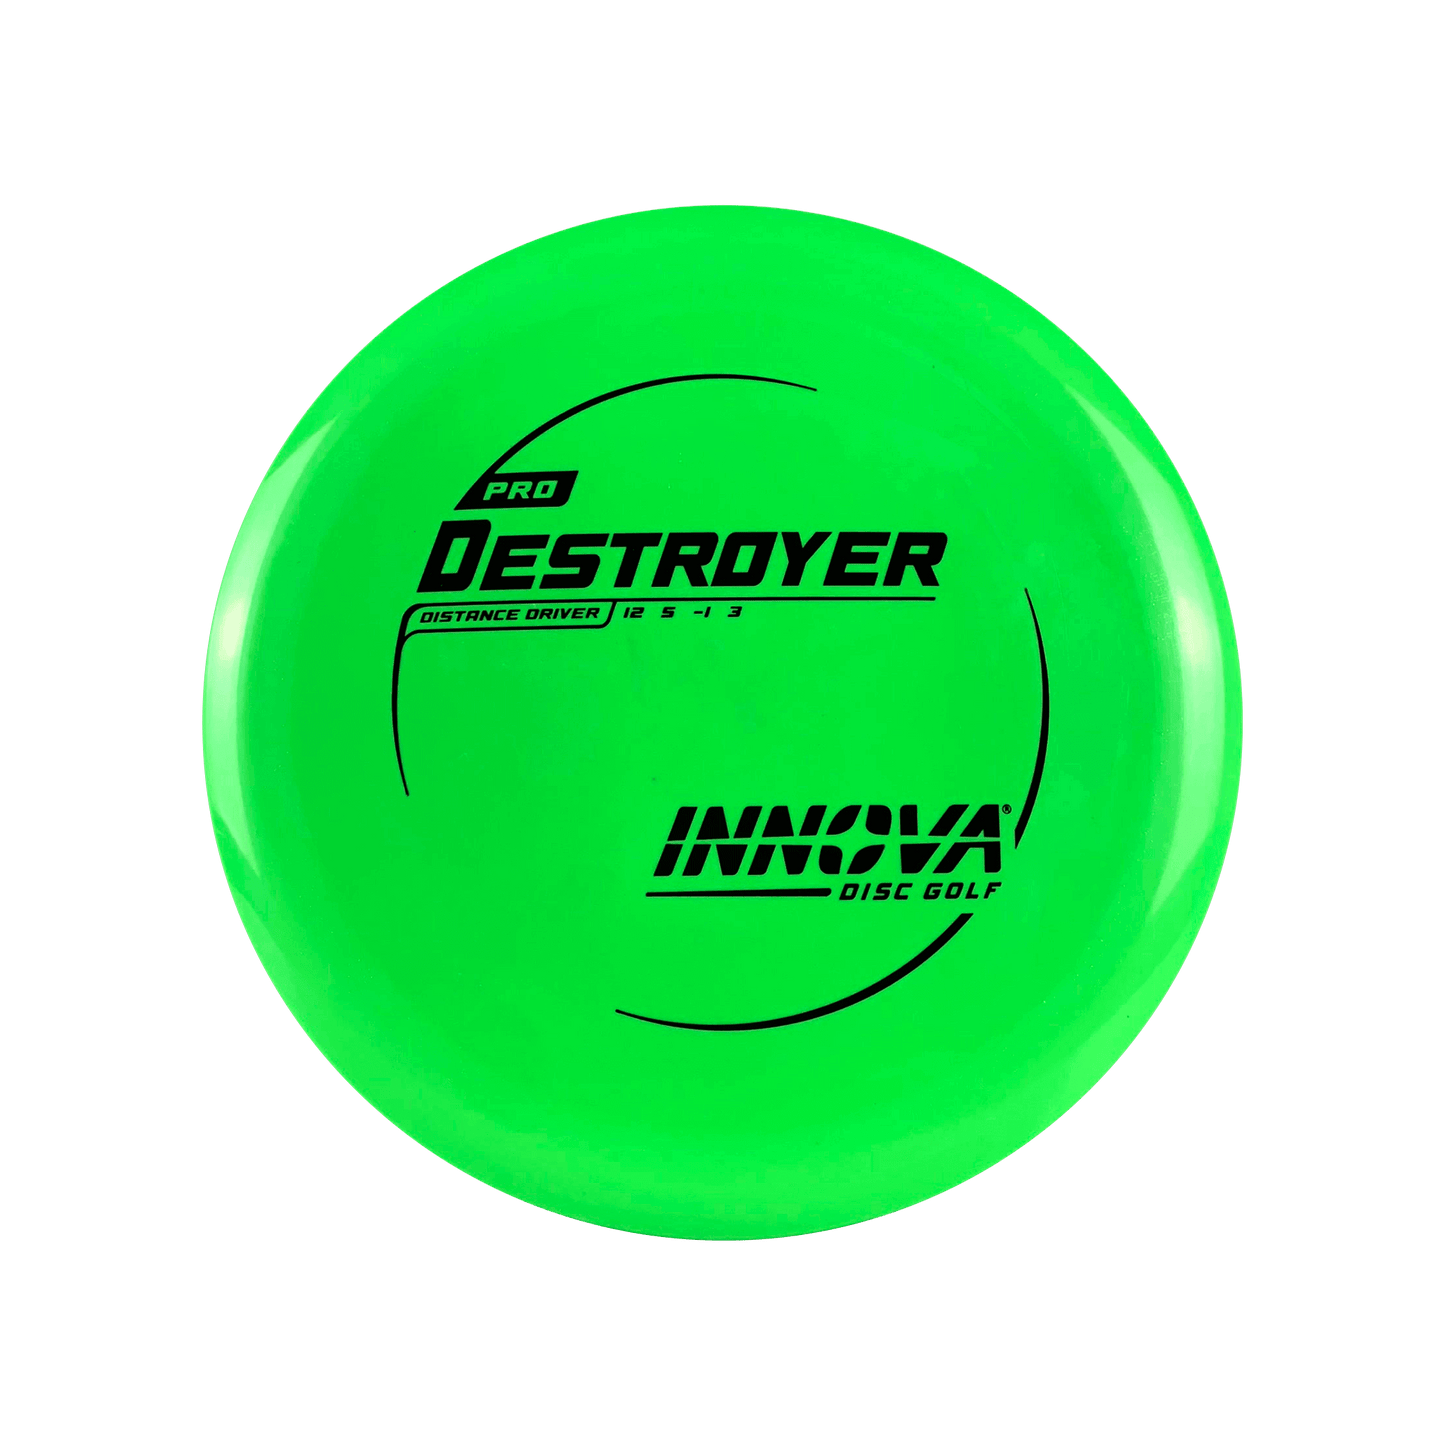 Pro Destroyer Disc Innova lime green 171 